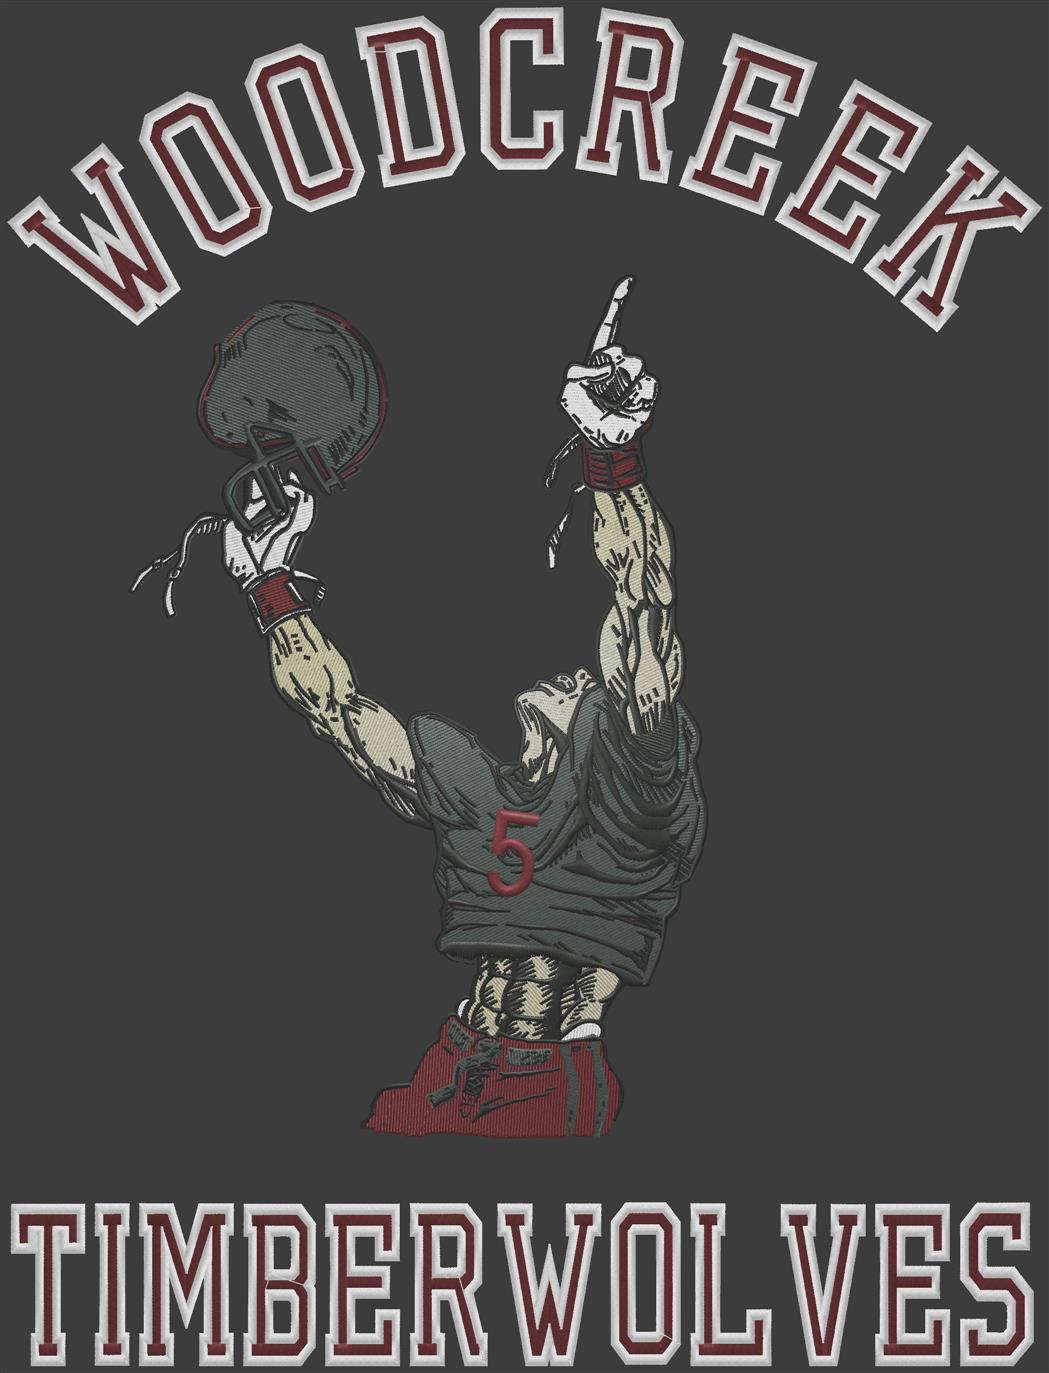 Woodcreek 72